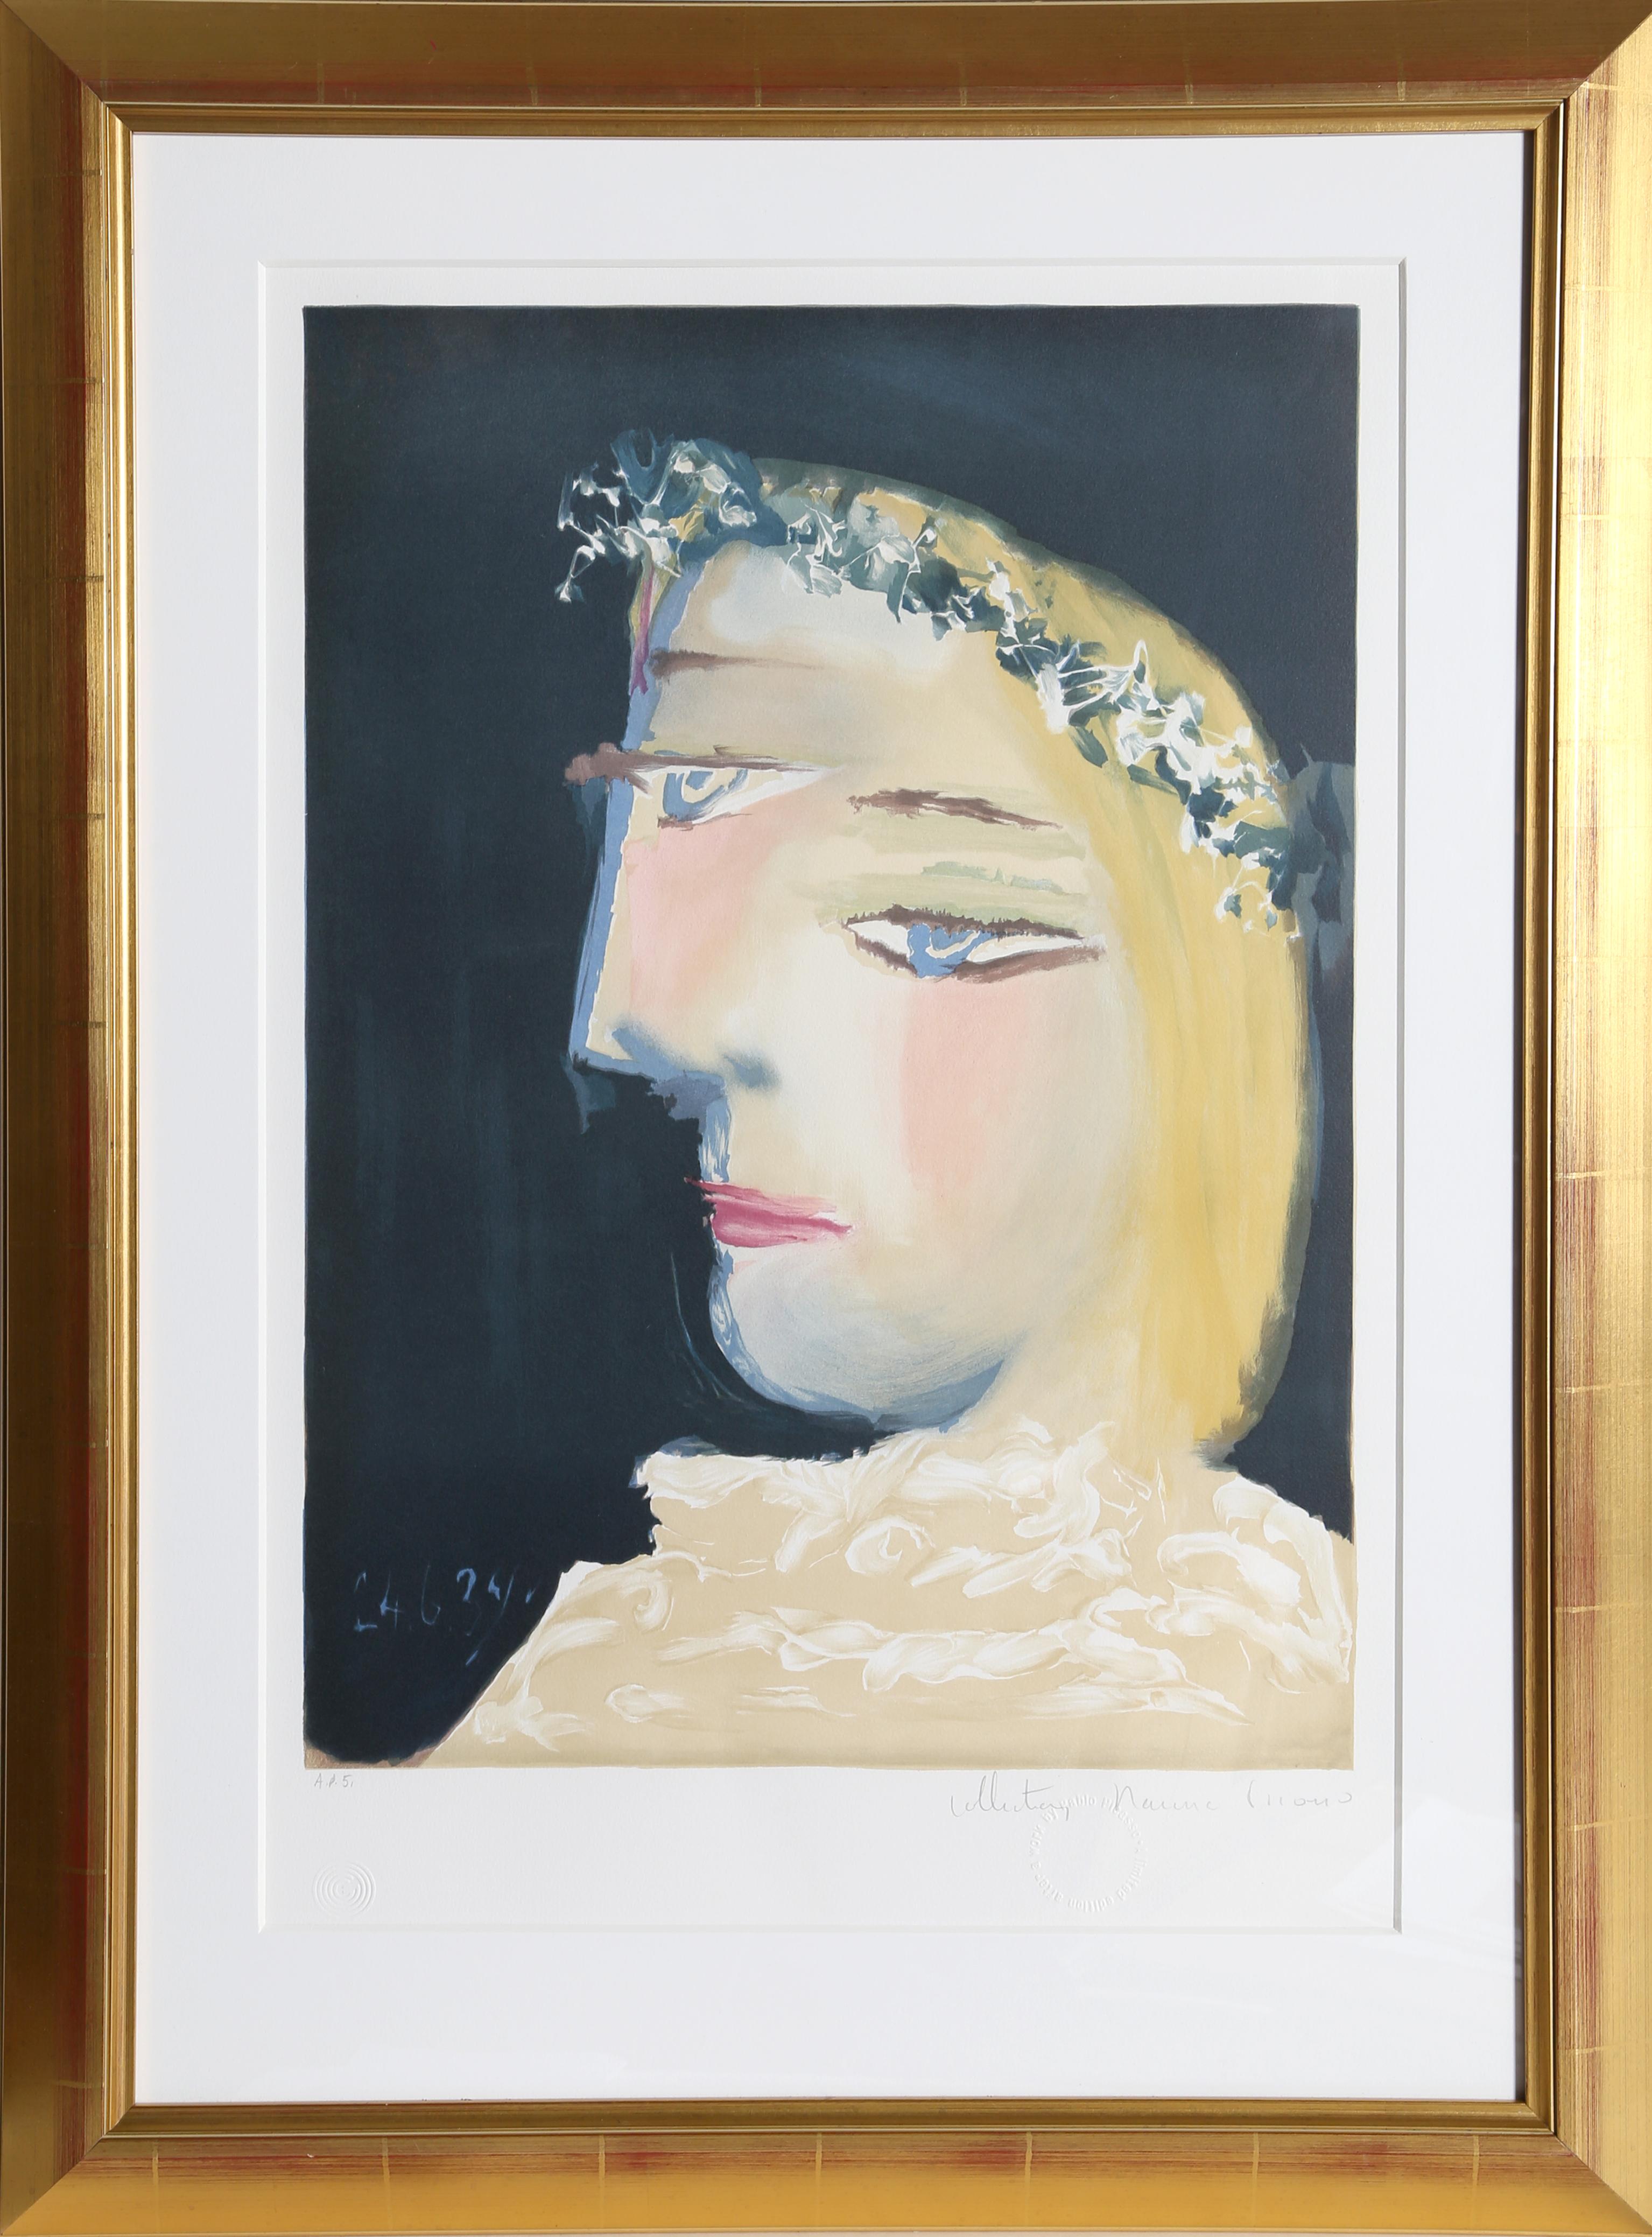 Femme a la Robe, Blanche Couronee de Fleurs – kubistische Lithographie von Pablo Picasso